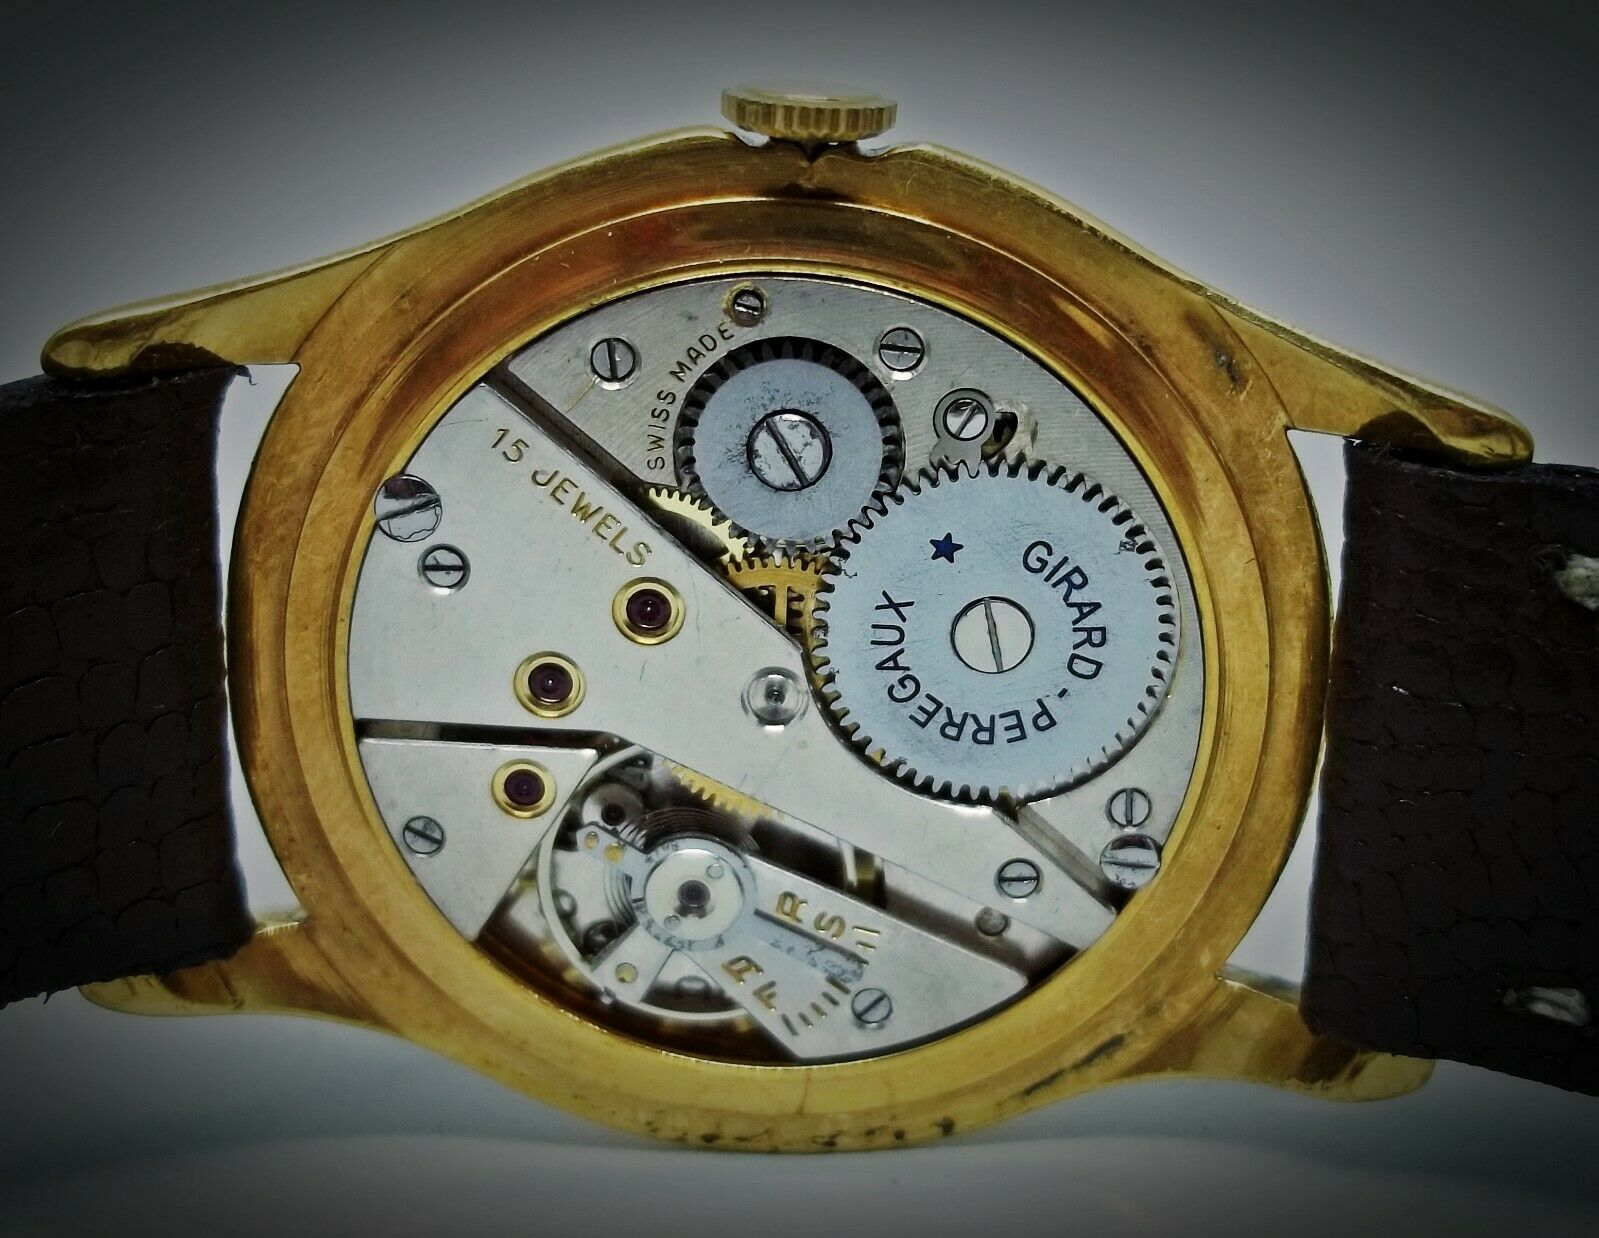 Girard Perregaux- Beautiful vintage swiss made watch - Image 9 of 9